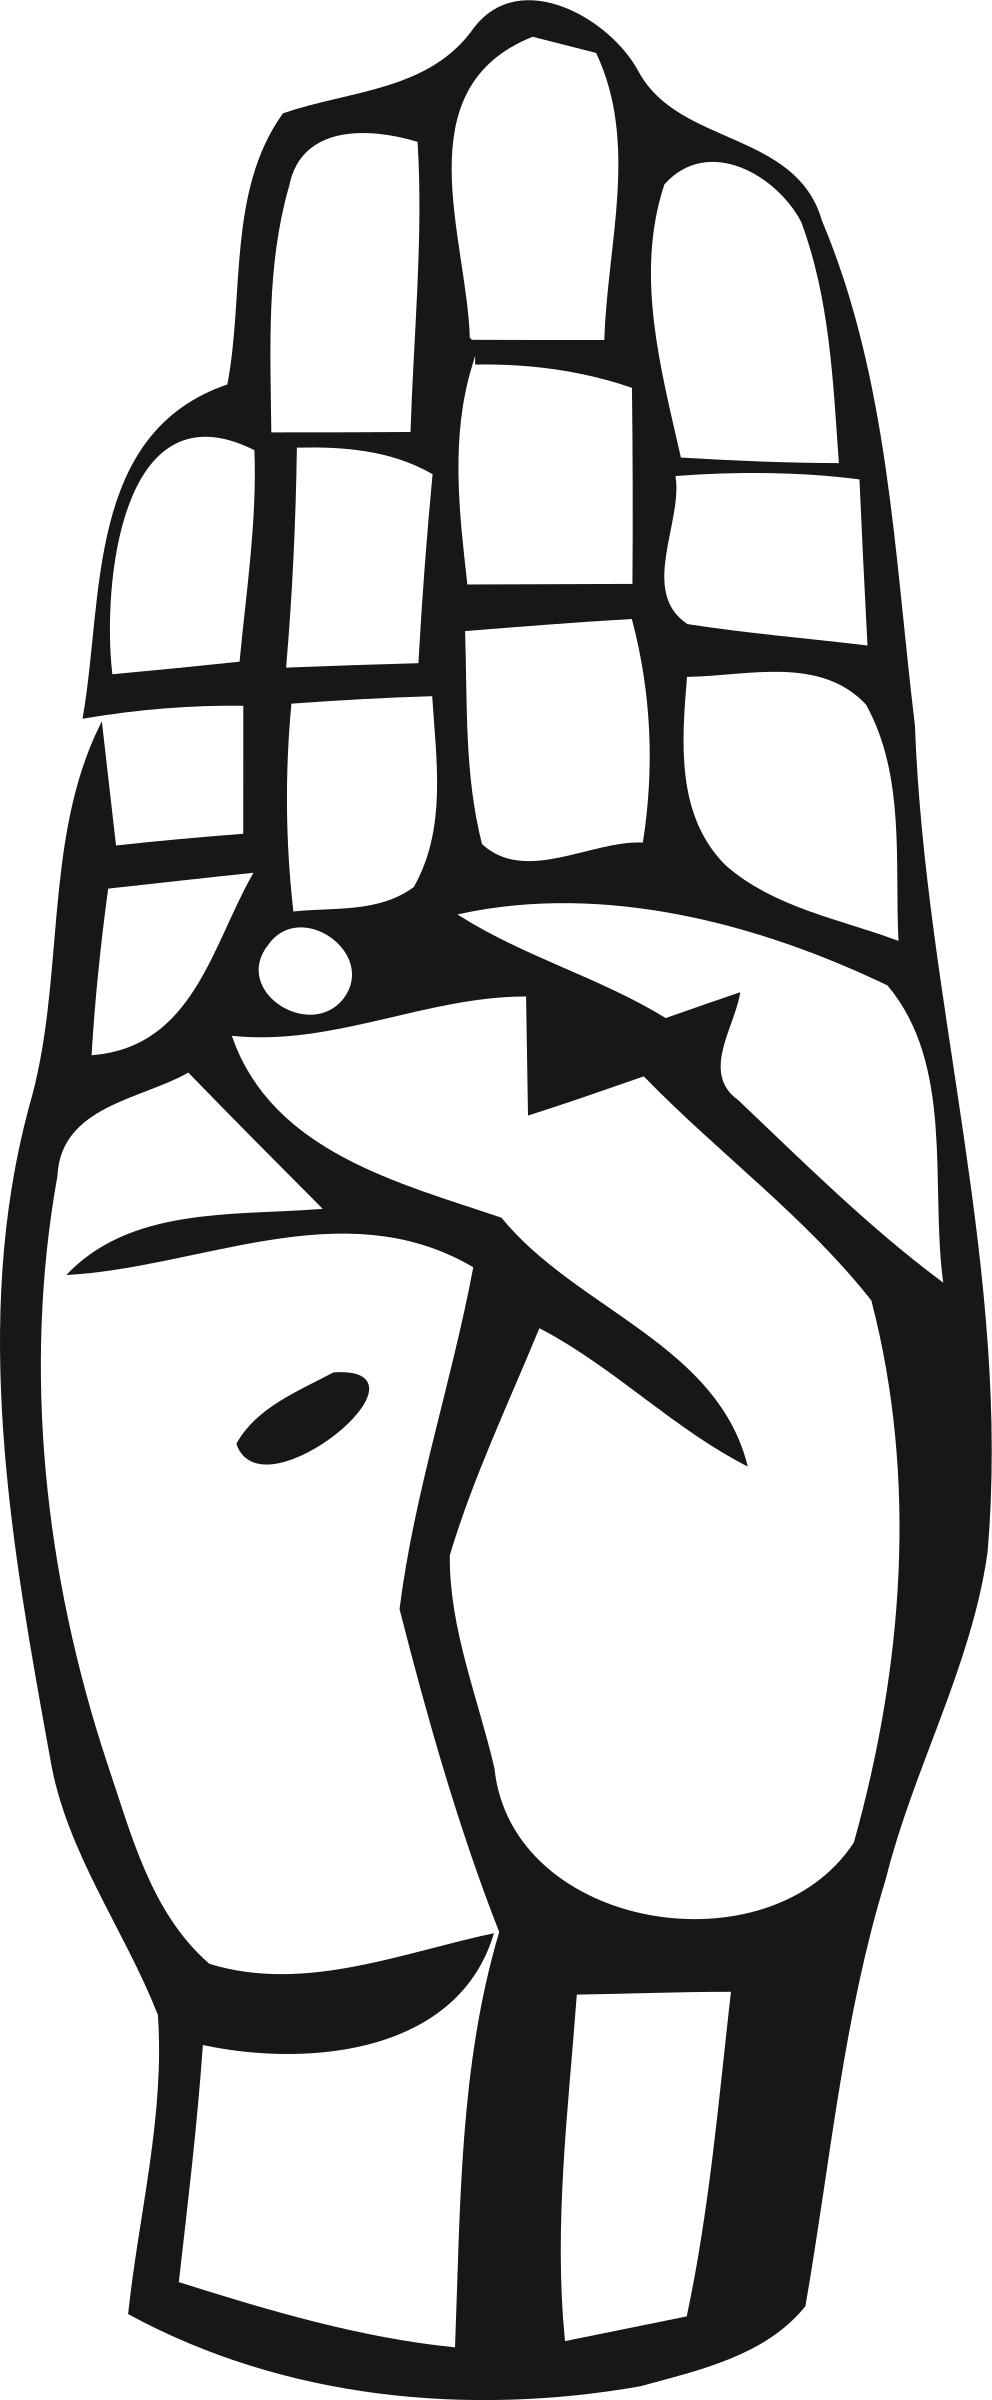 Big Image - Sign Language Letter B (992x2400)